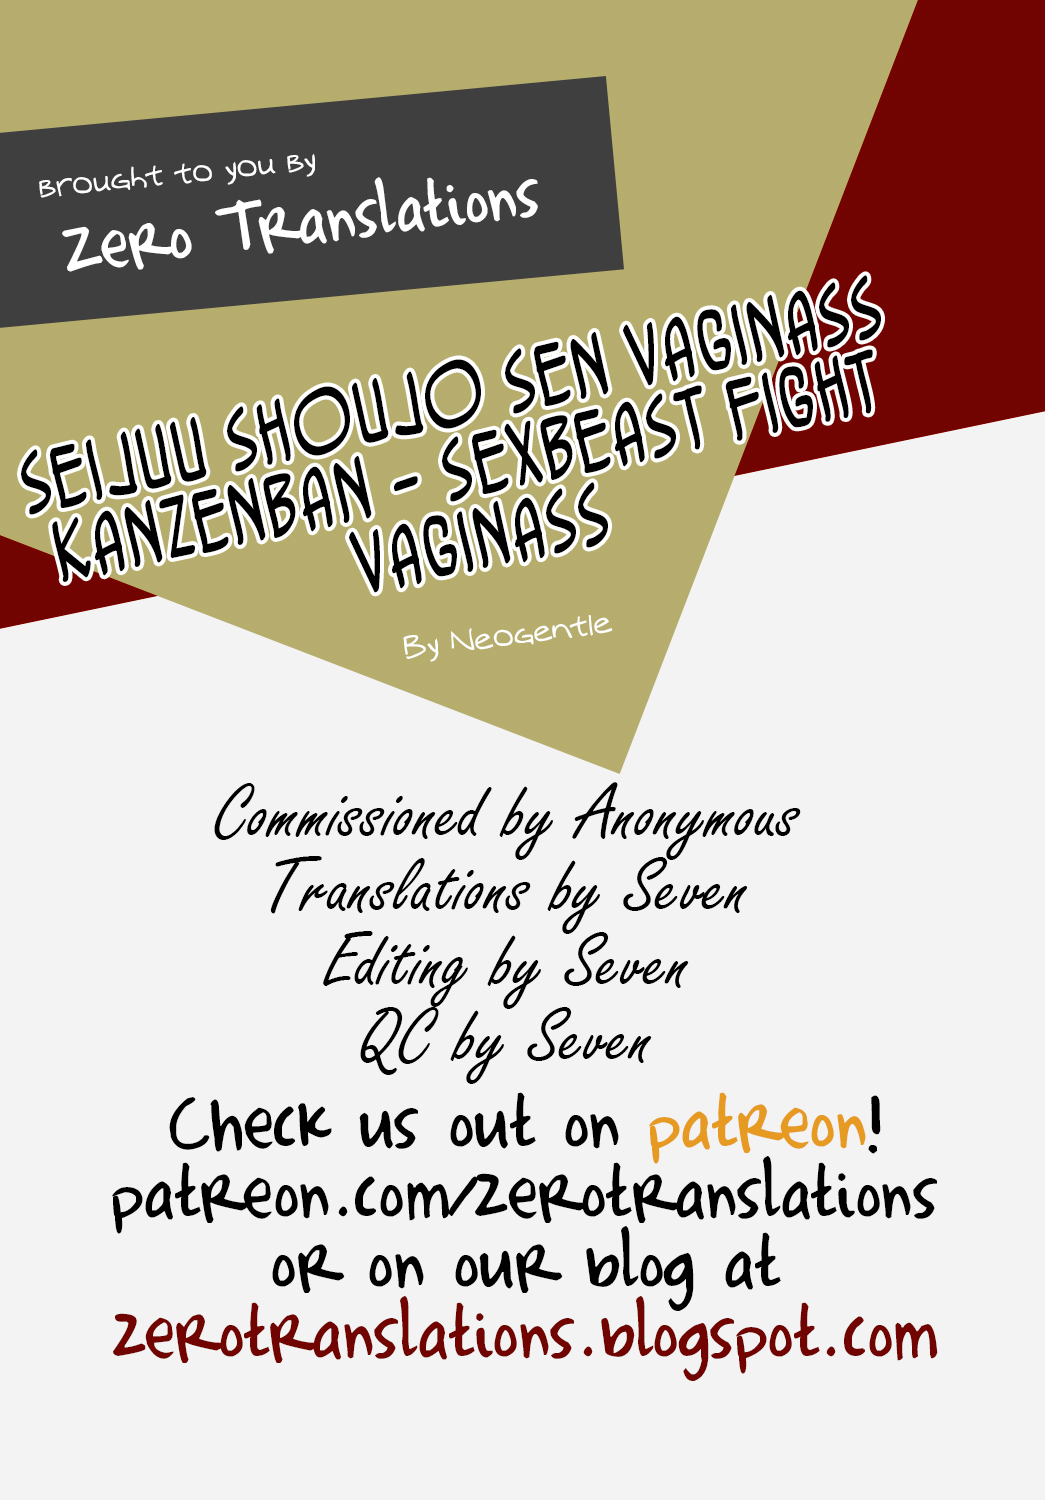 [Neo Gentle] Seijuu Shoujo Sen Vaginass Kanzenban - Sexbeast Fight Vaginass [English] [Zero Translations] [NEO GENTLE] 性獣少女戦ヴァギュナス 完全版 [英訳]